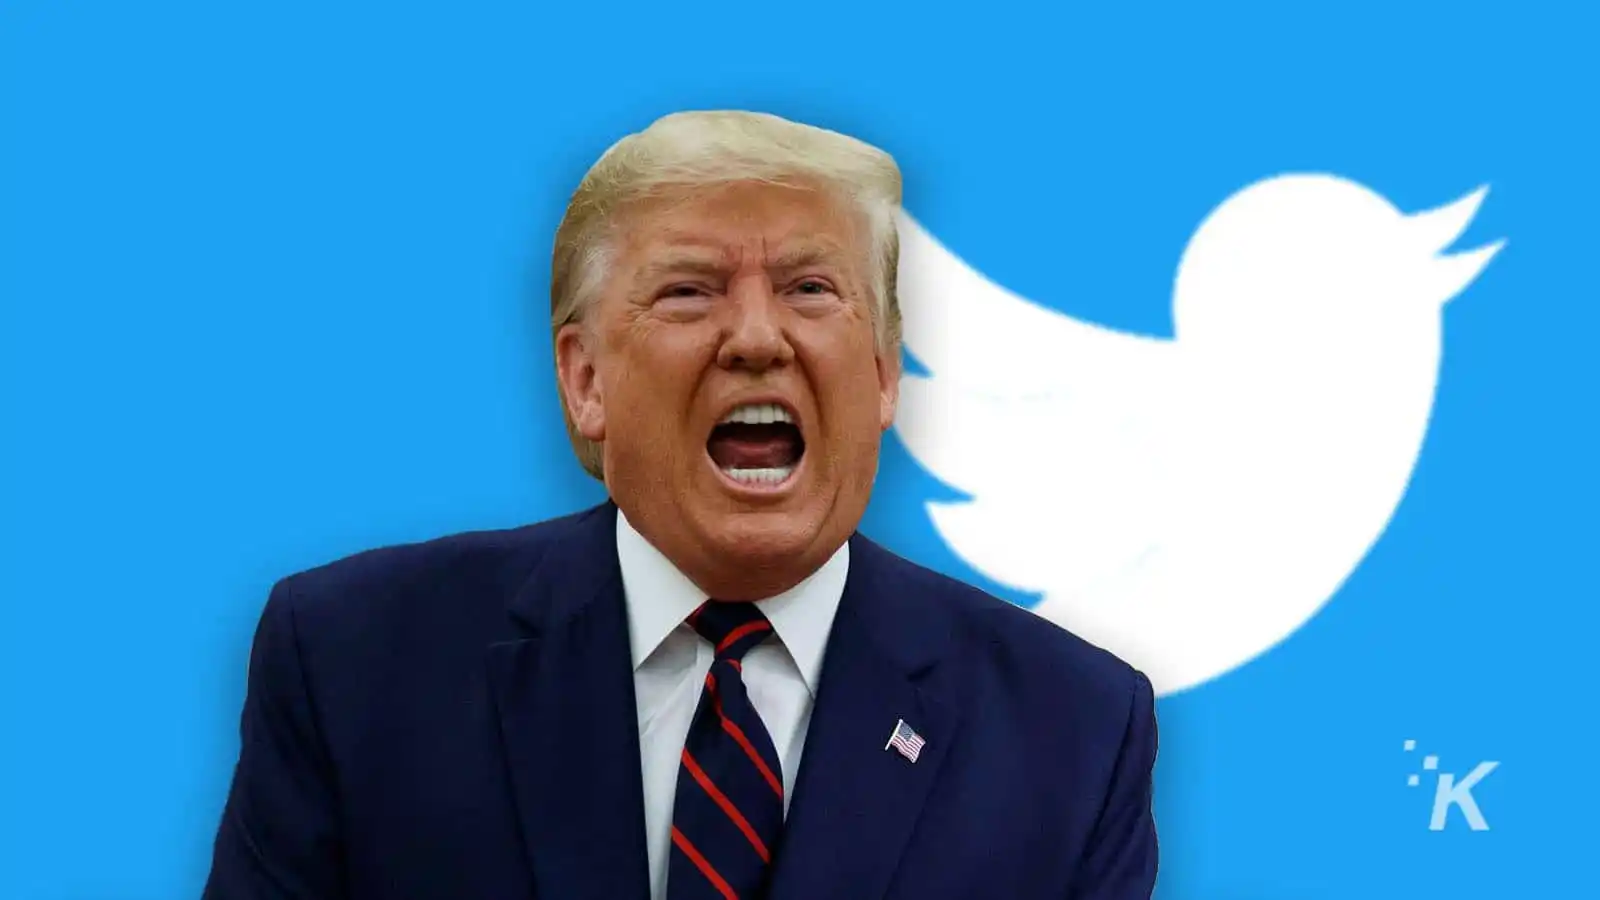 Twitter puts warning on Trump